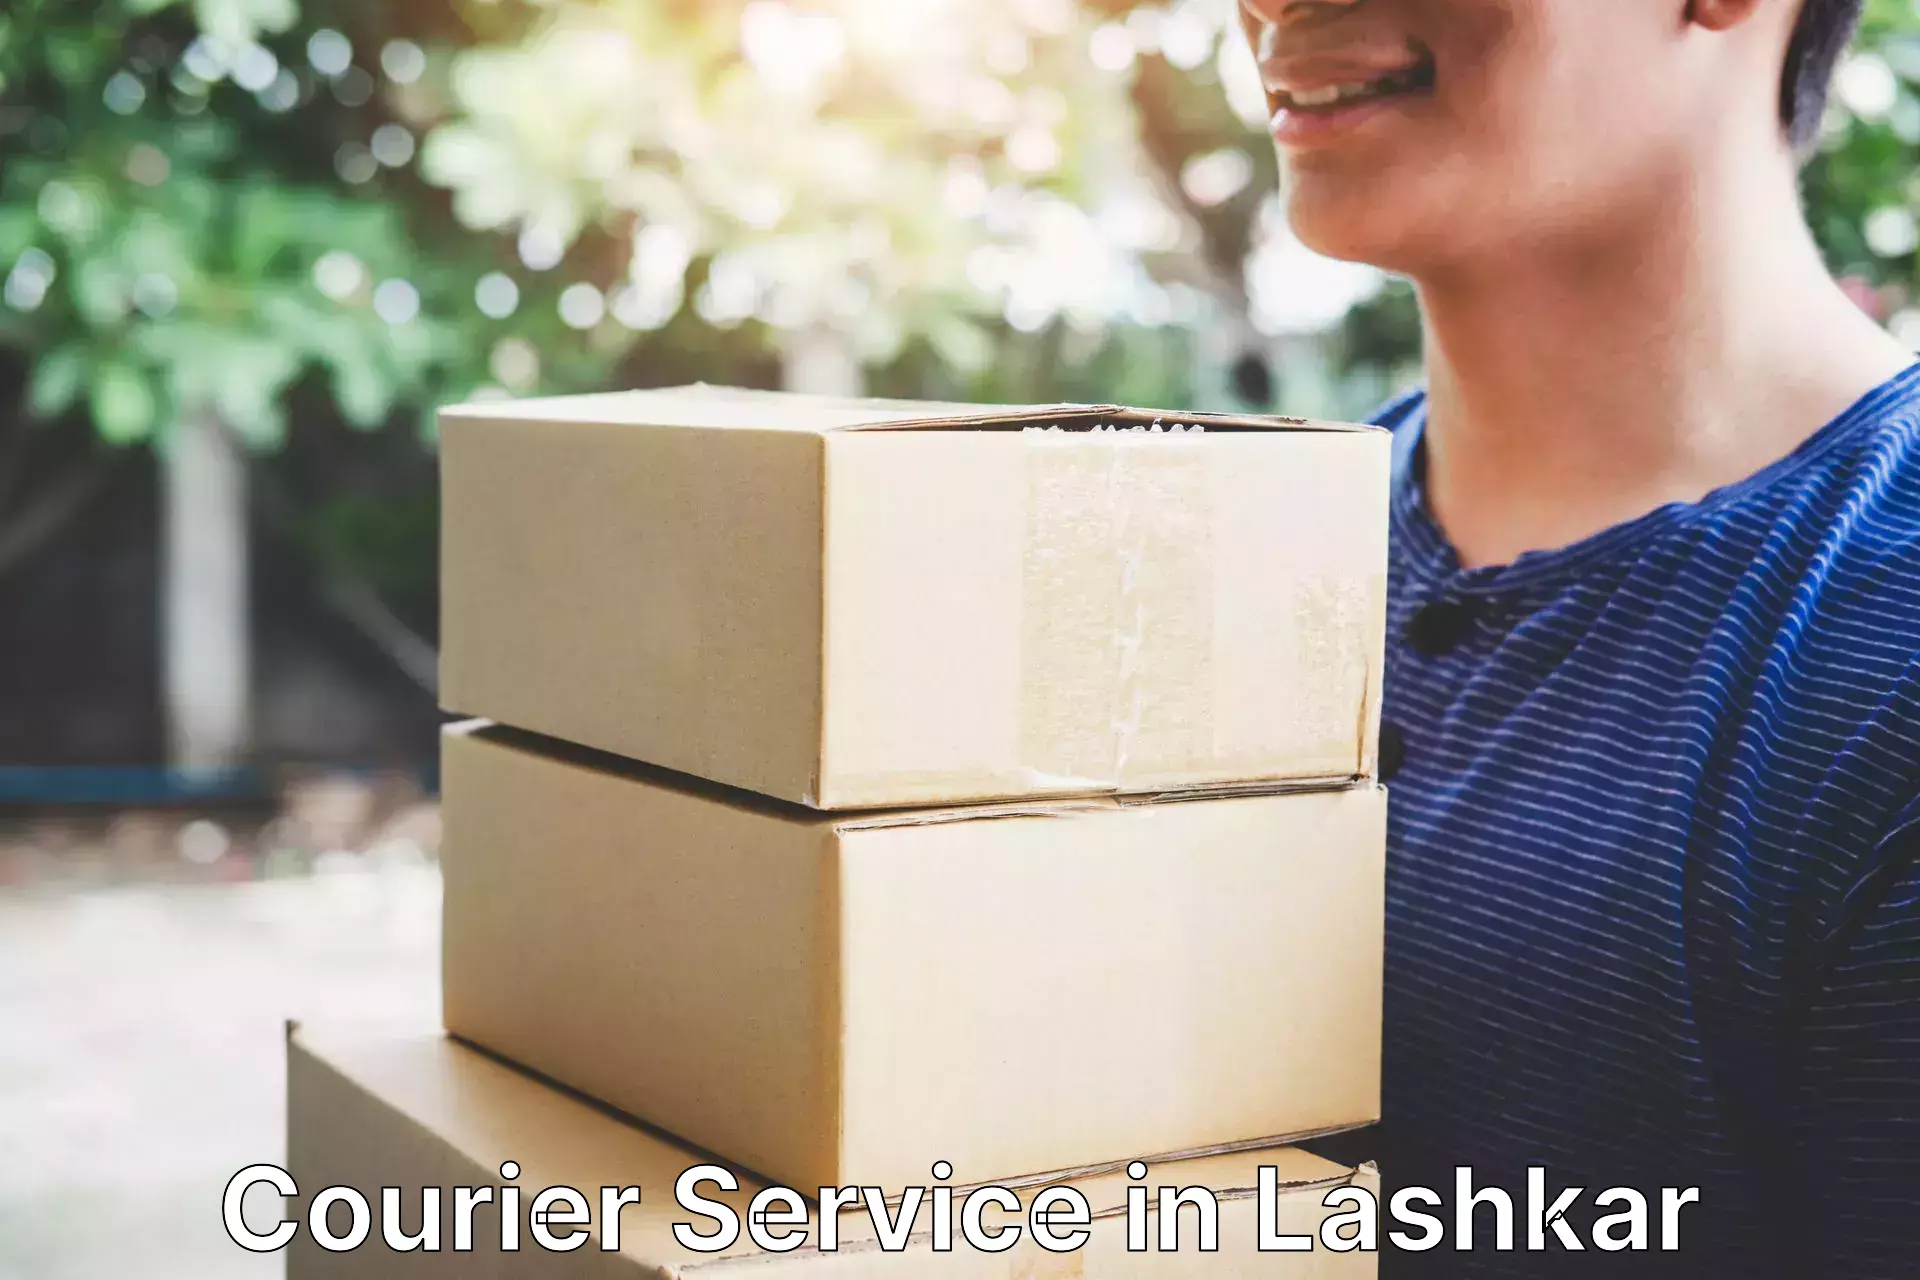 High-capacity parcel service in Lashkar